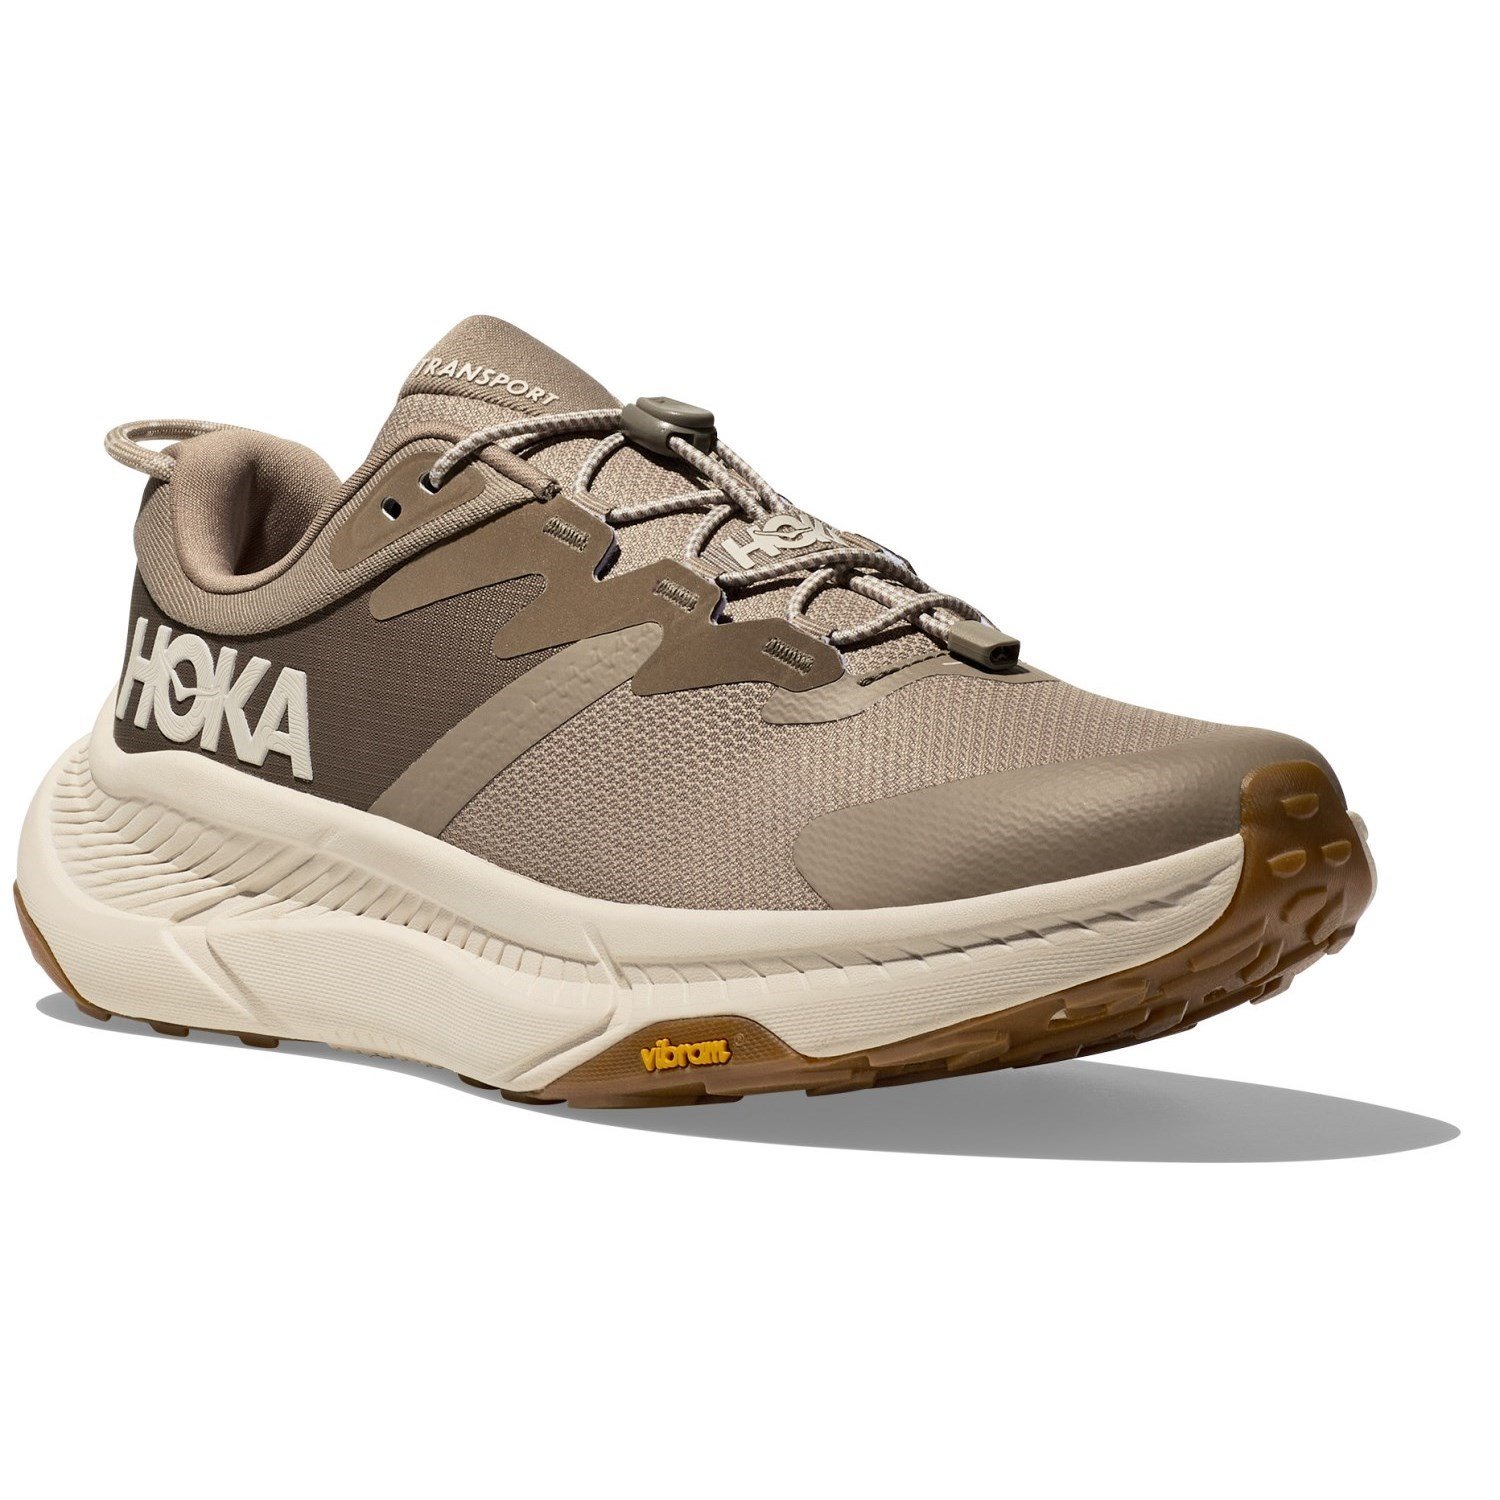 Hoka Transport - Mens Walking Shoes - Dune/Eggnog | Sportitude